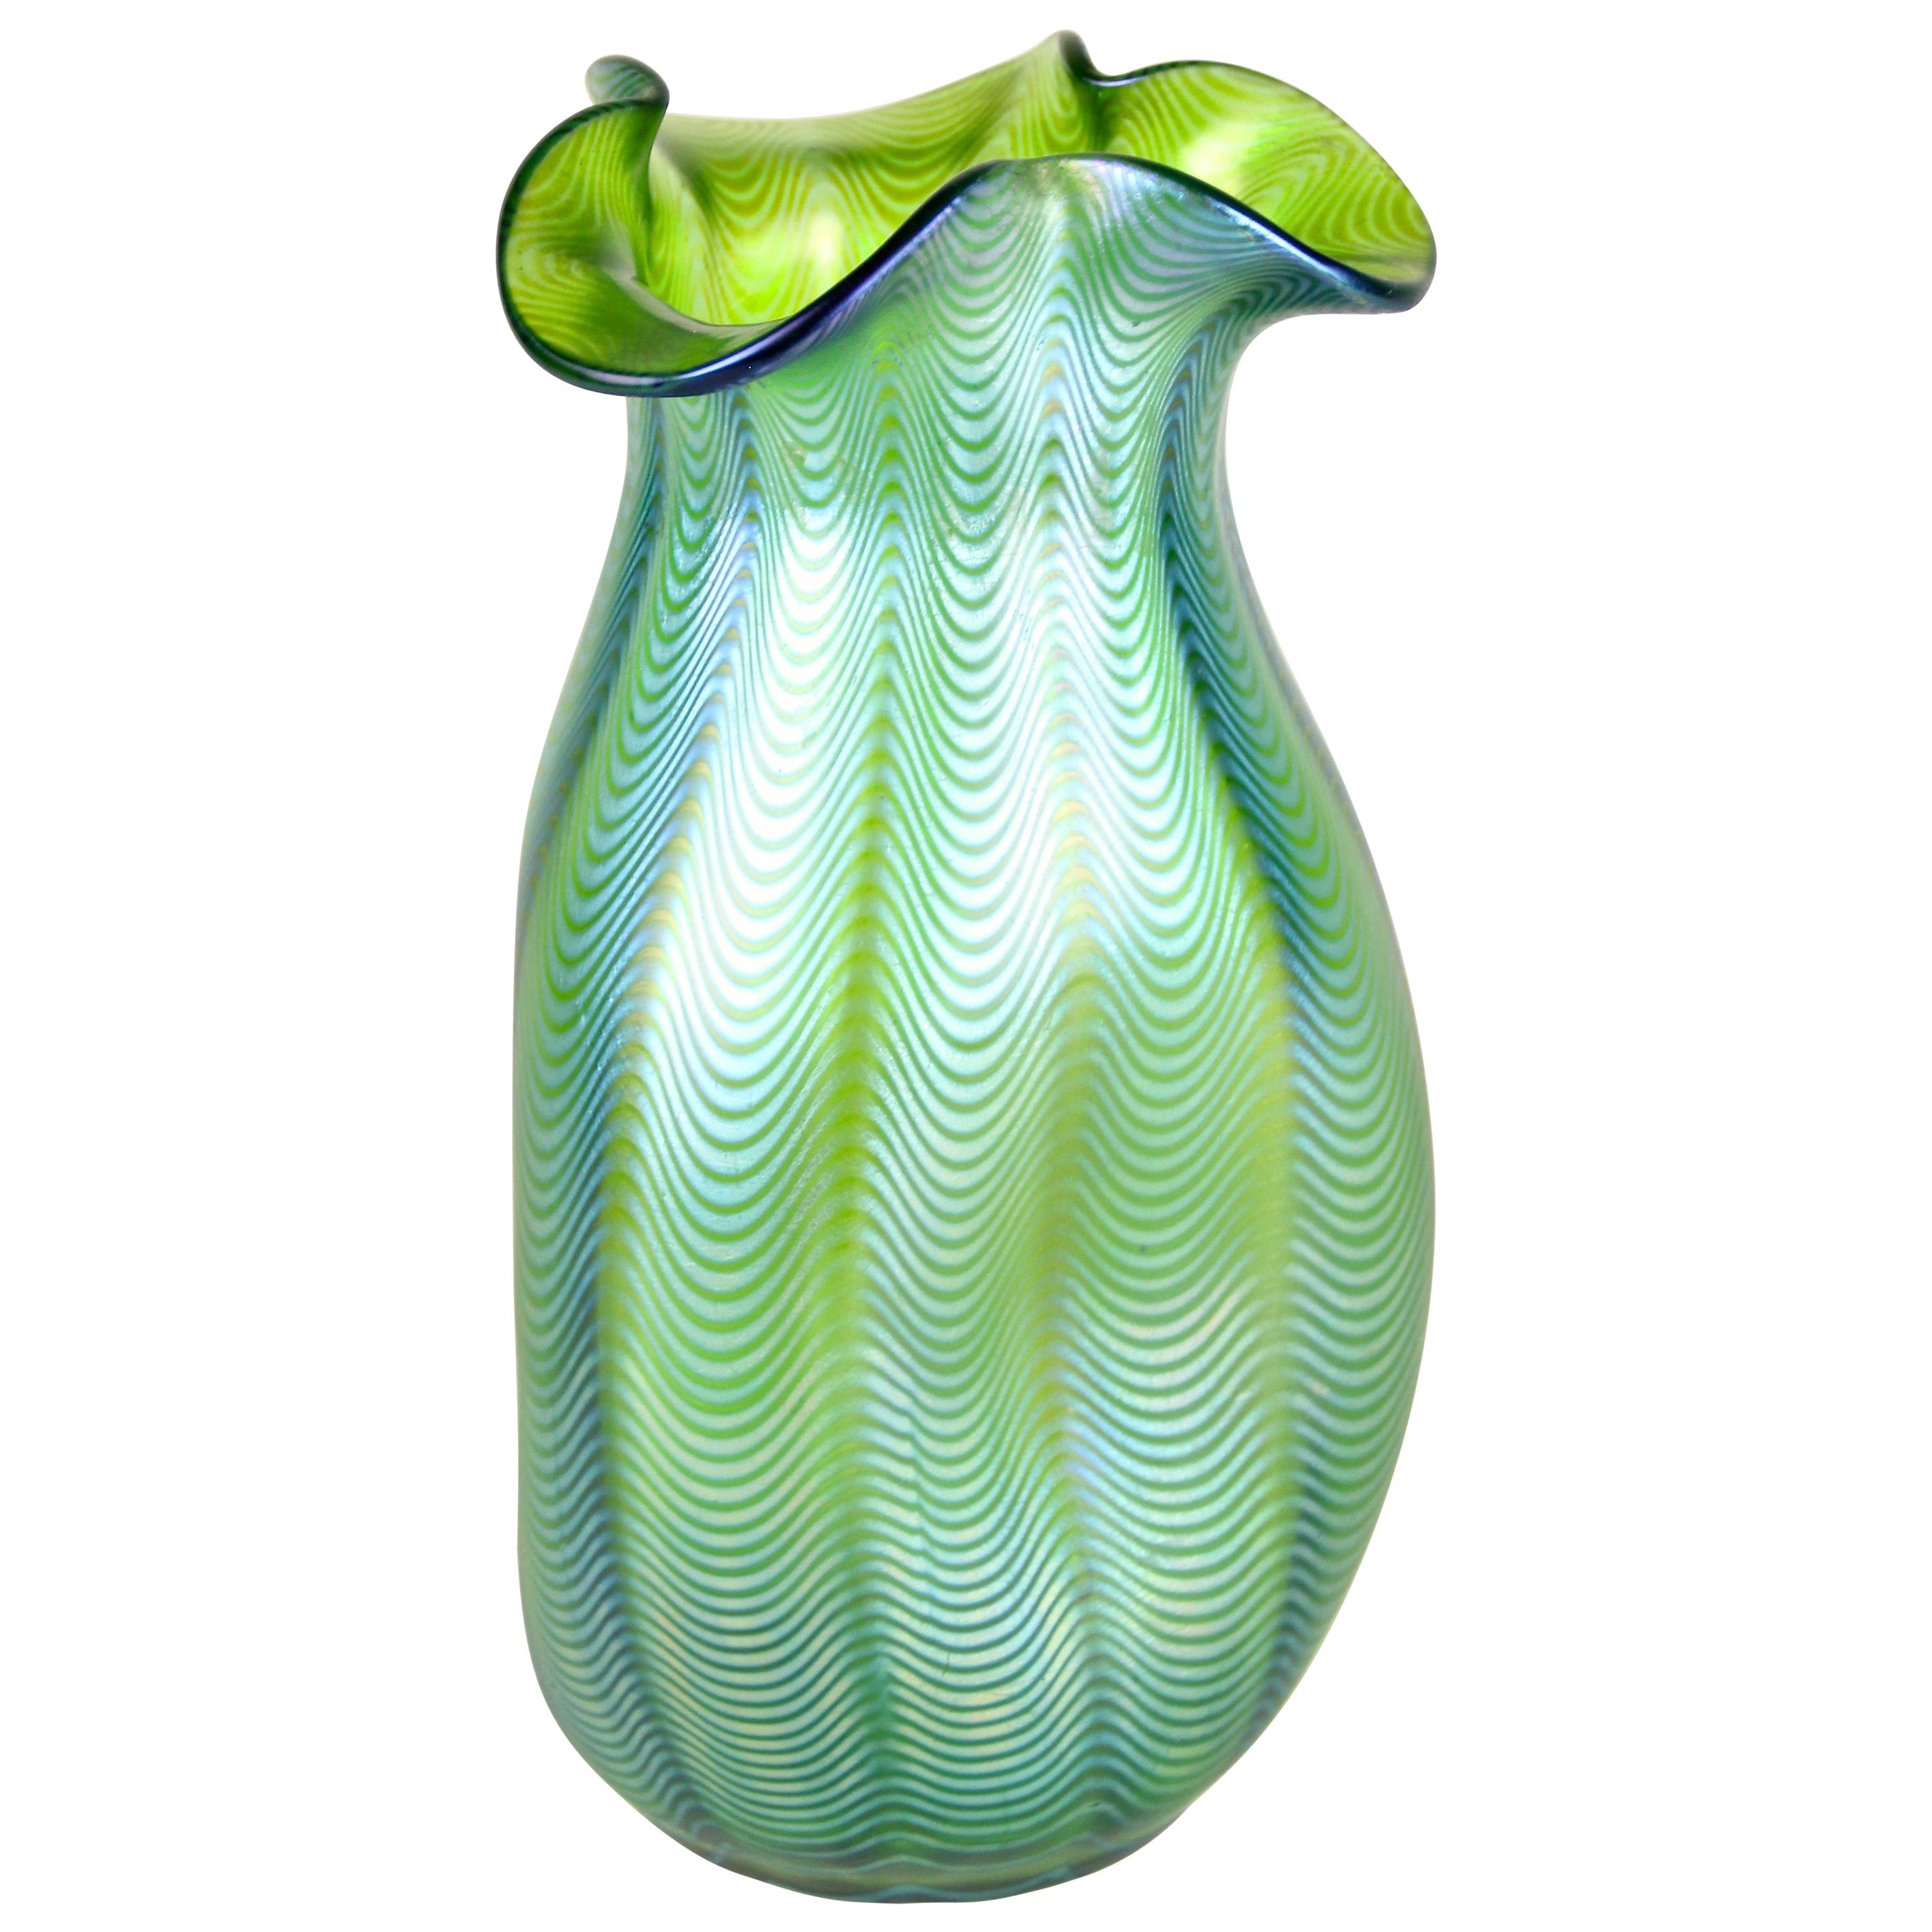 Loetz Witwe Glass Vase Crete Phaenomen 6893, Bohemia, circa 1898